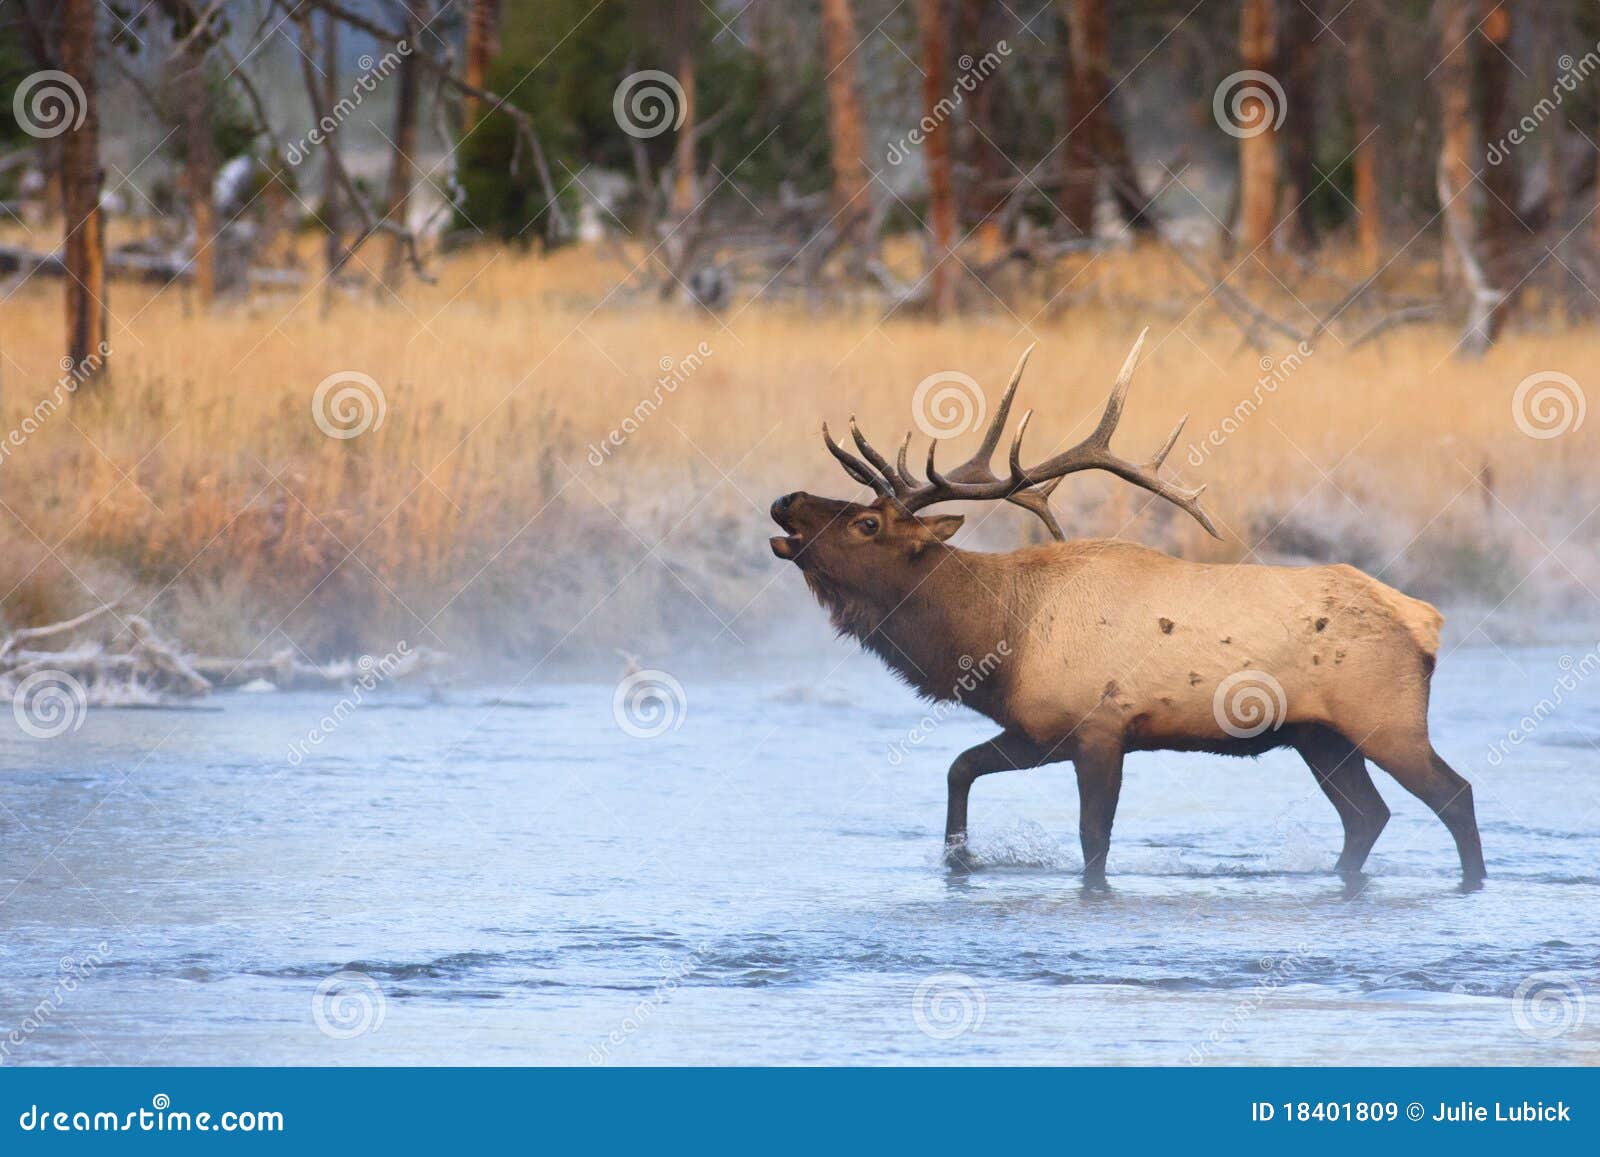 elk bugling while crossing river